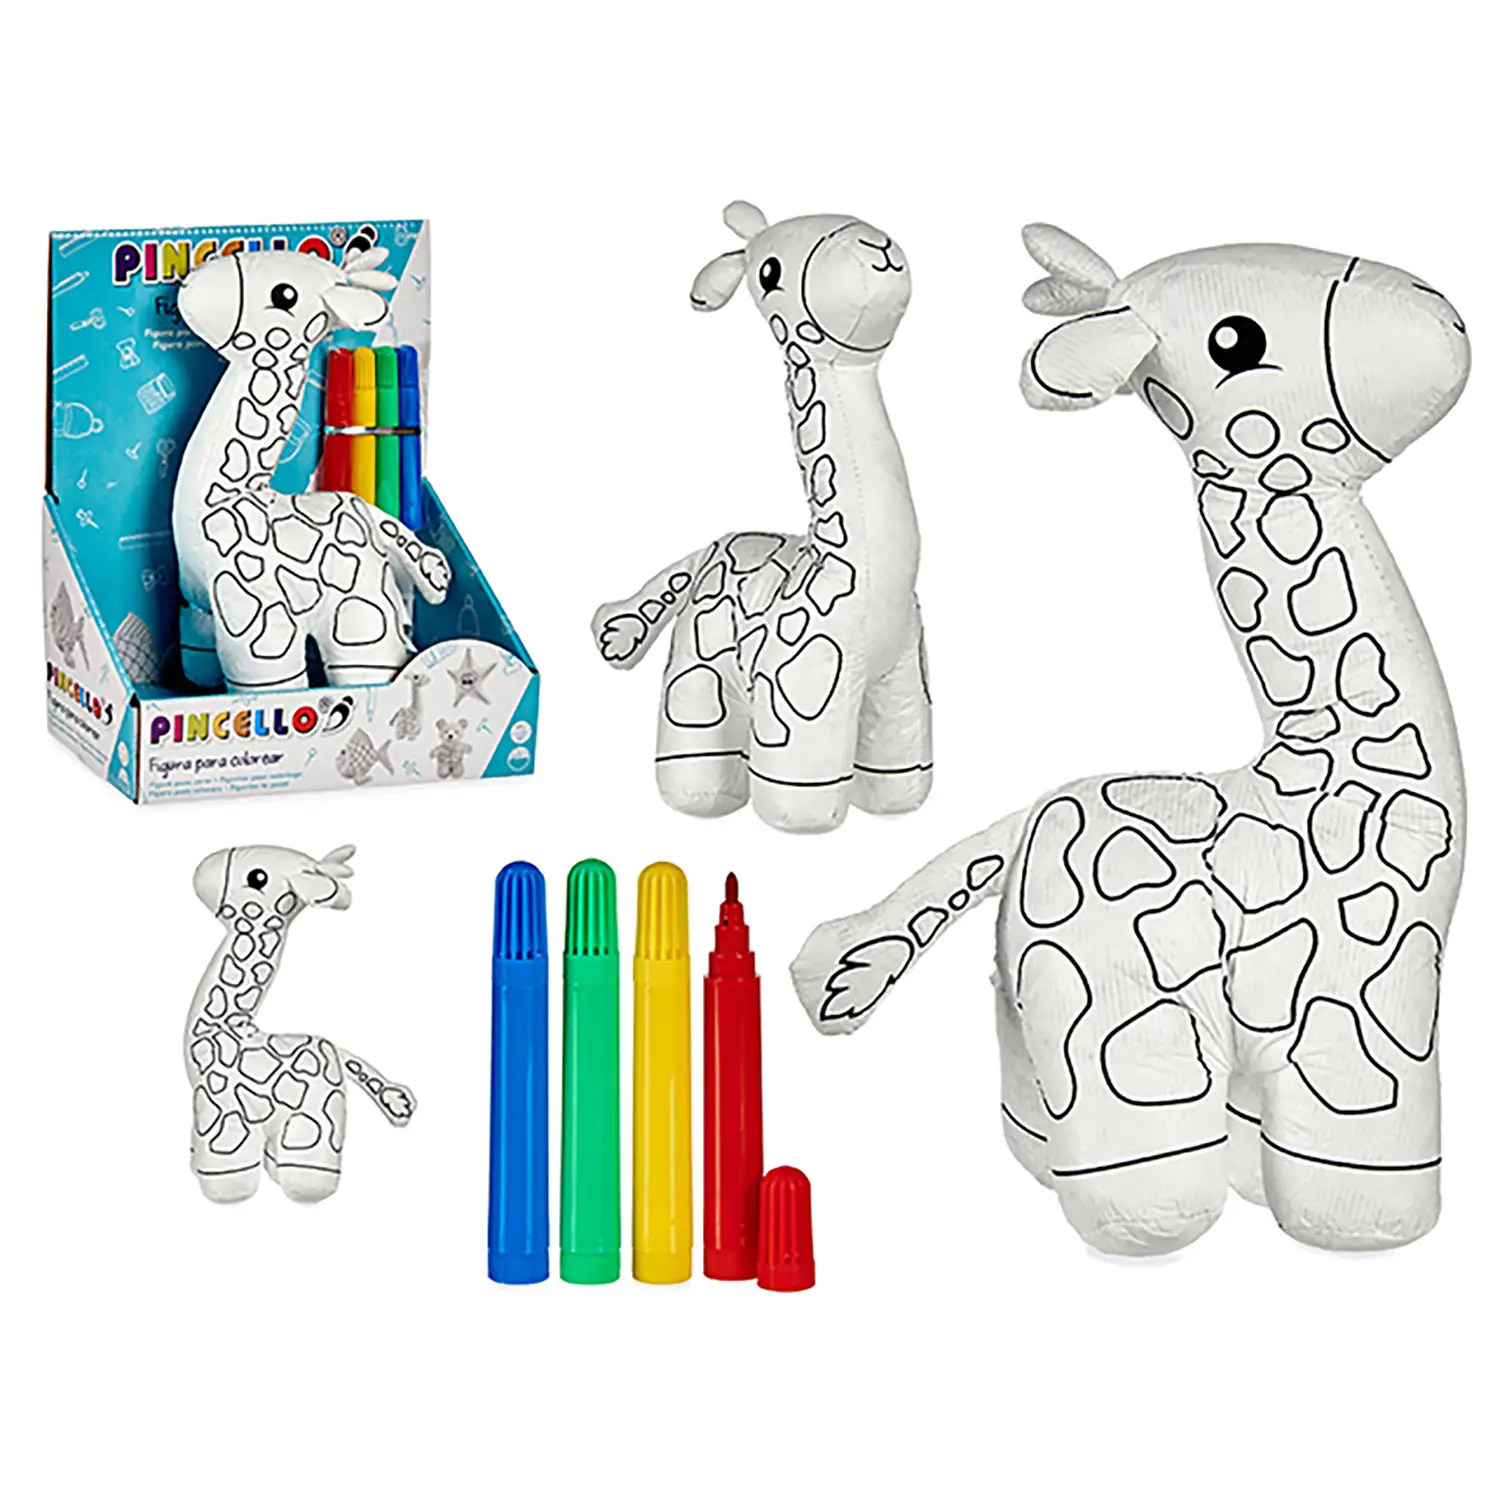 Peluche para pintar diseño girafa.